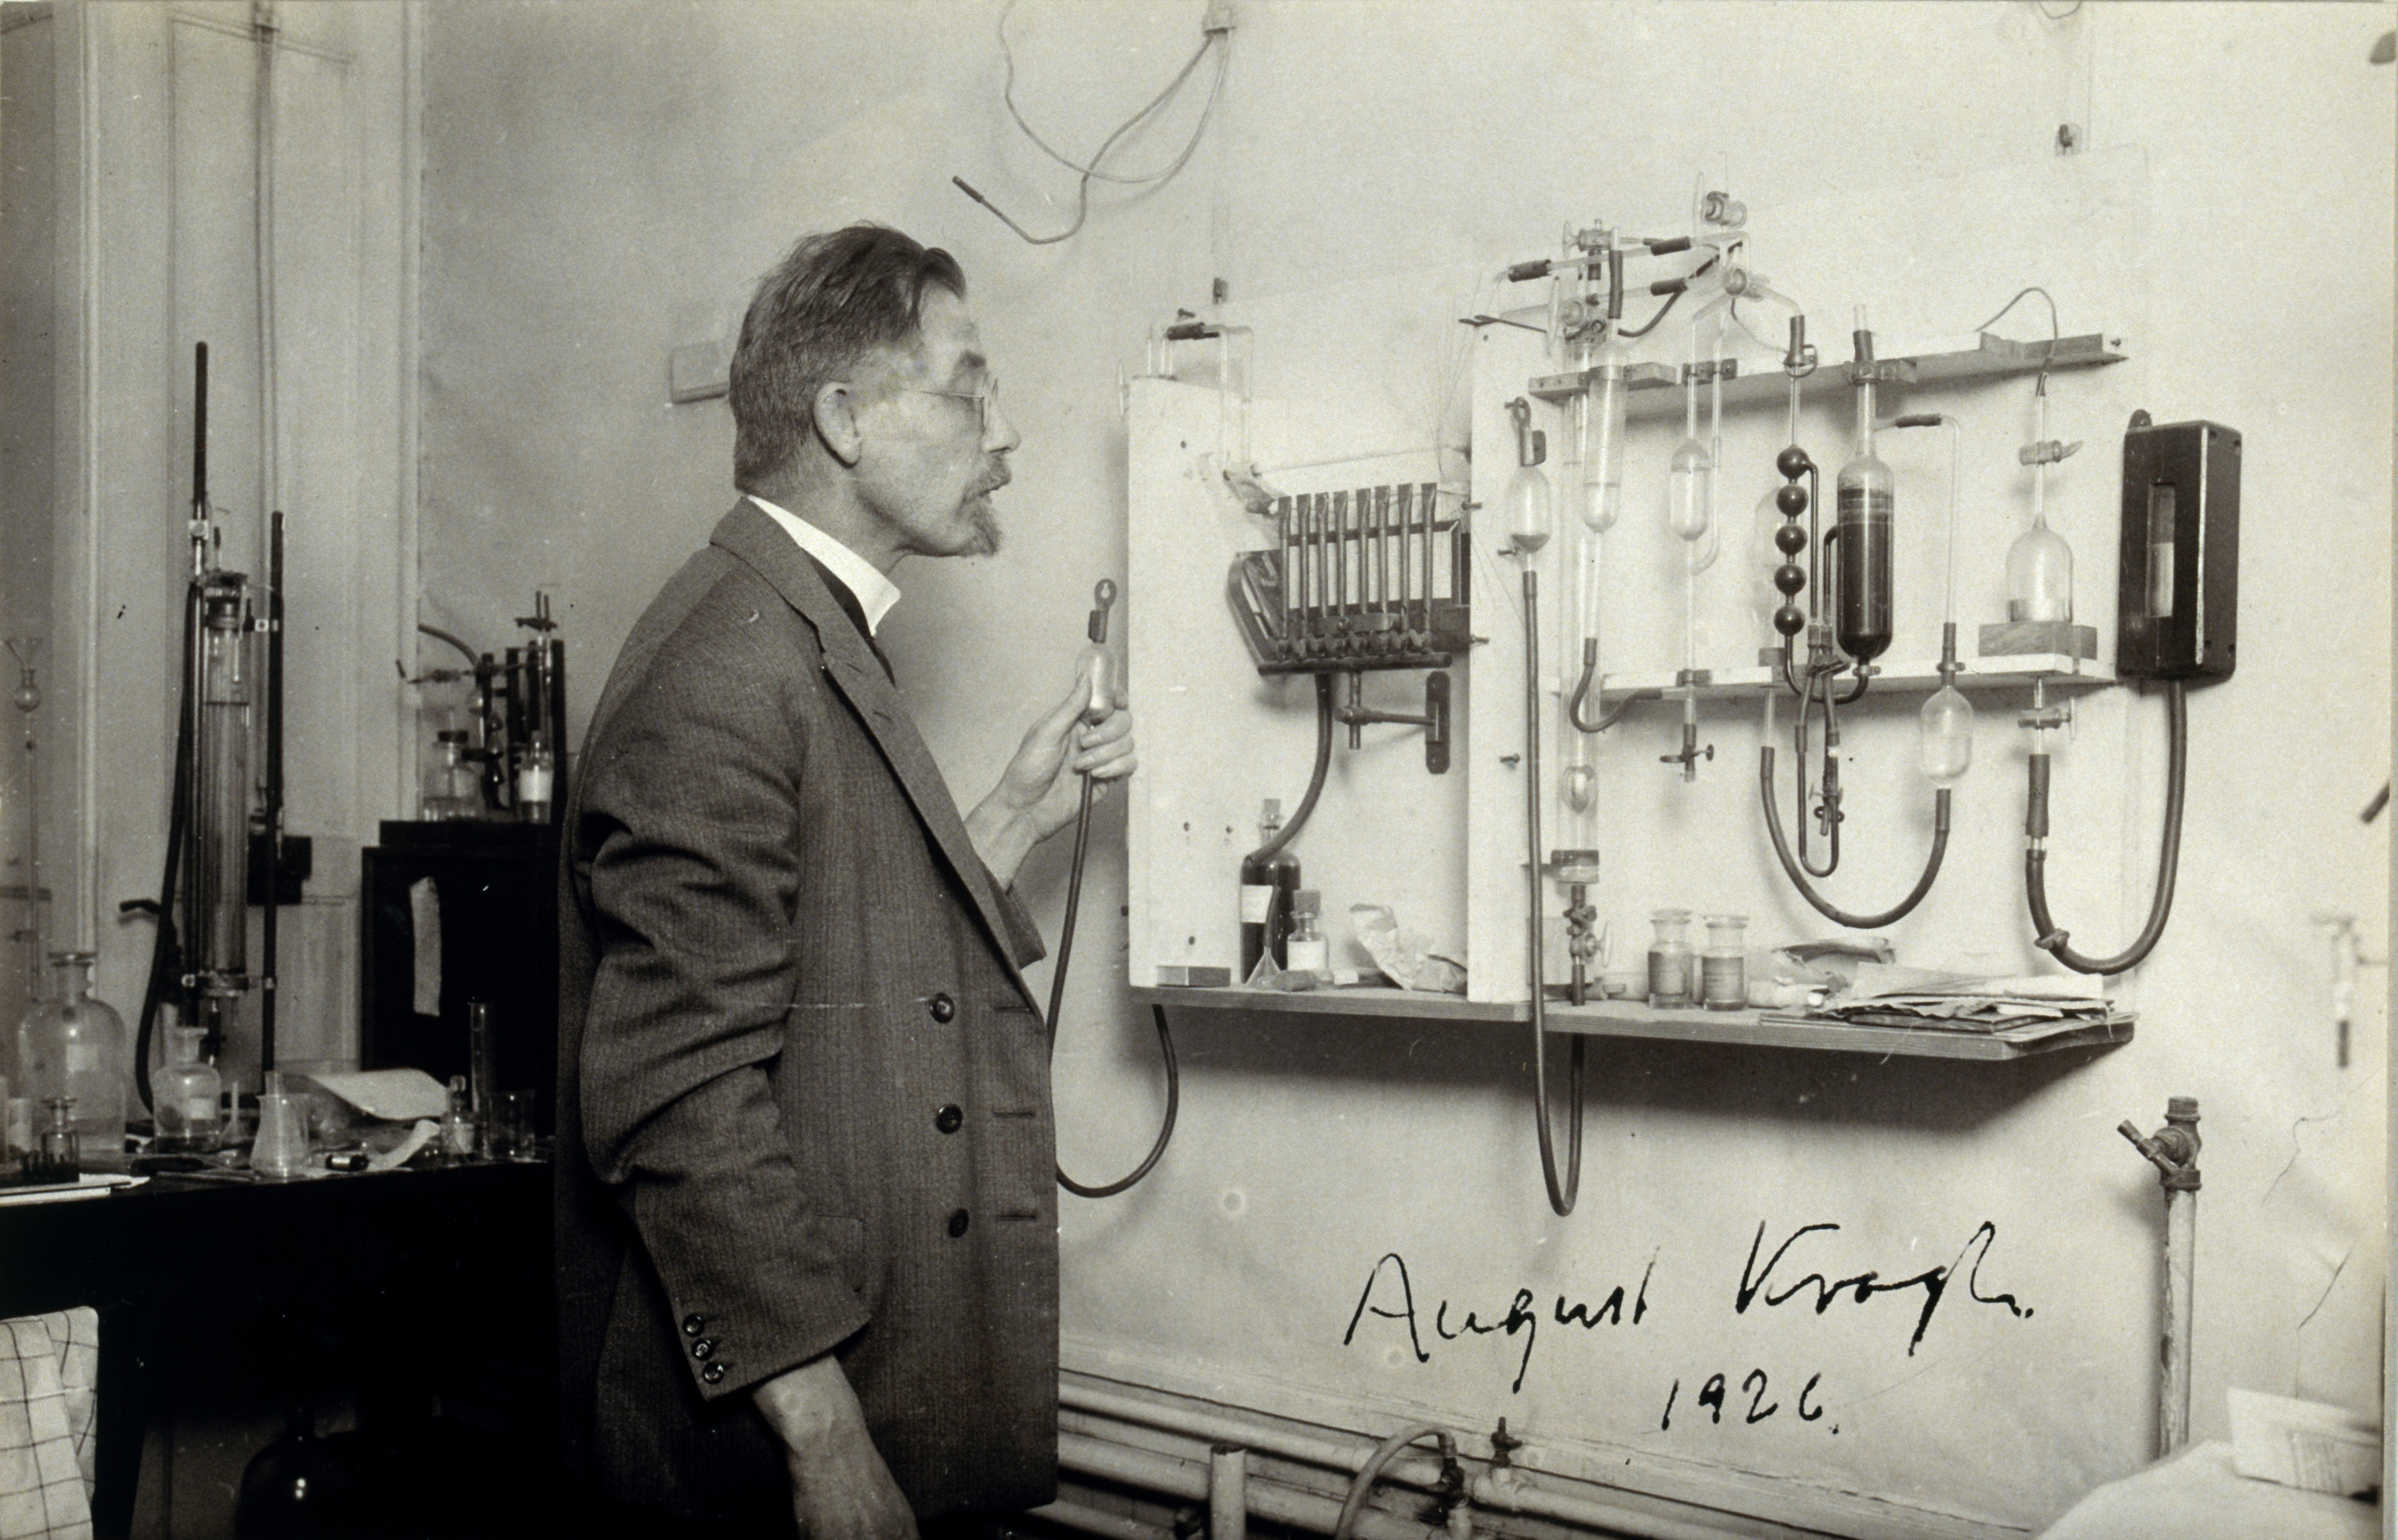 August Krogh. Photograph, 1926. Wellcome V0026657